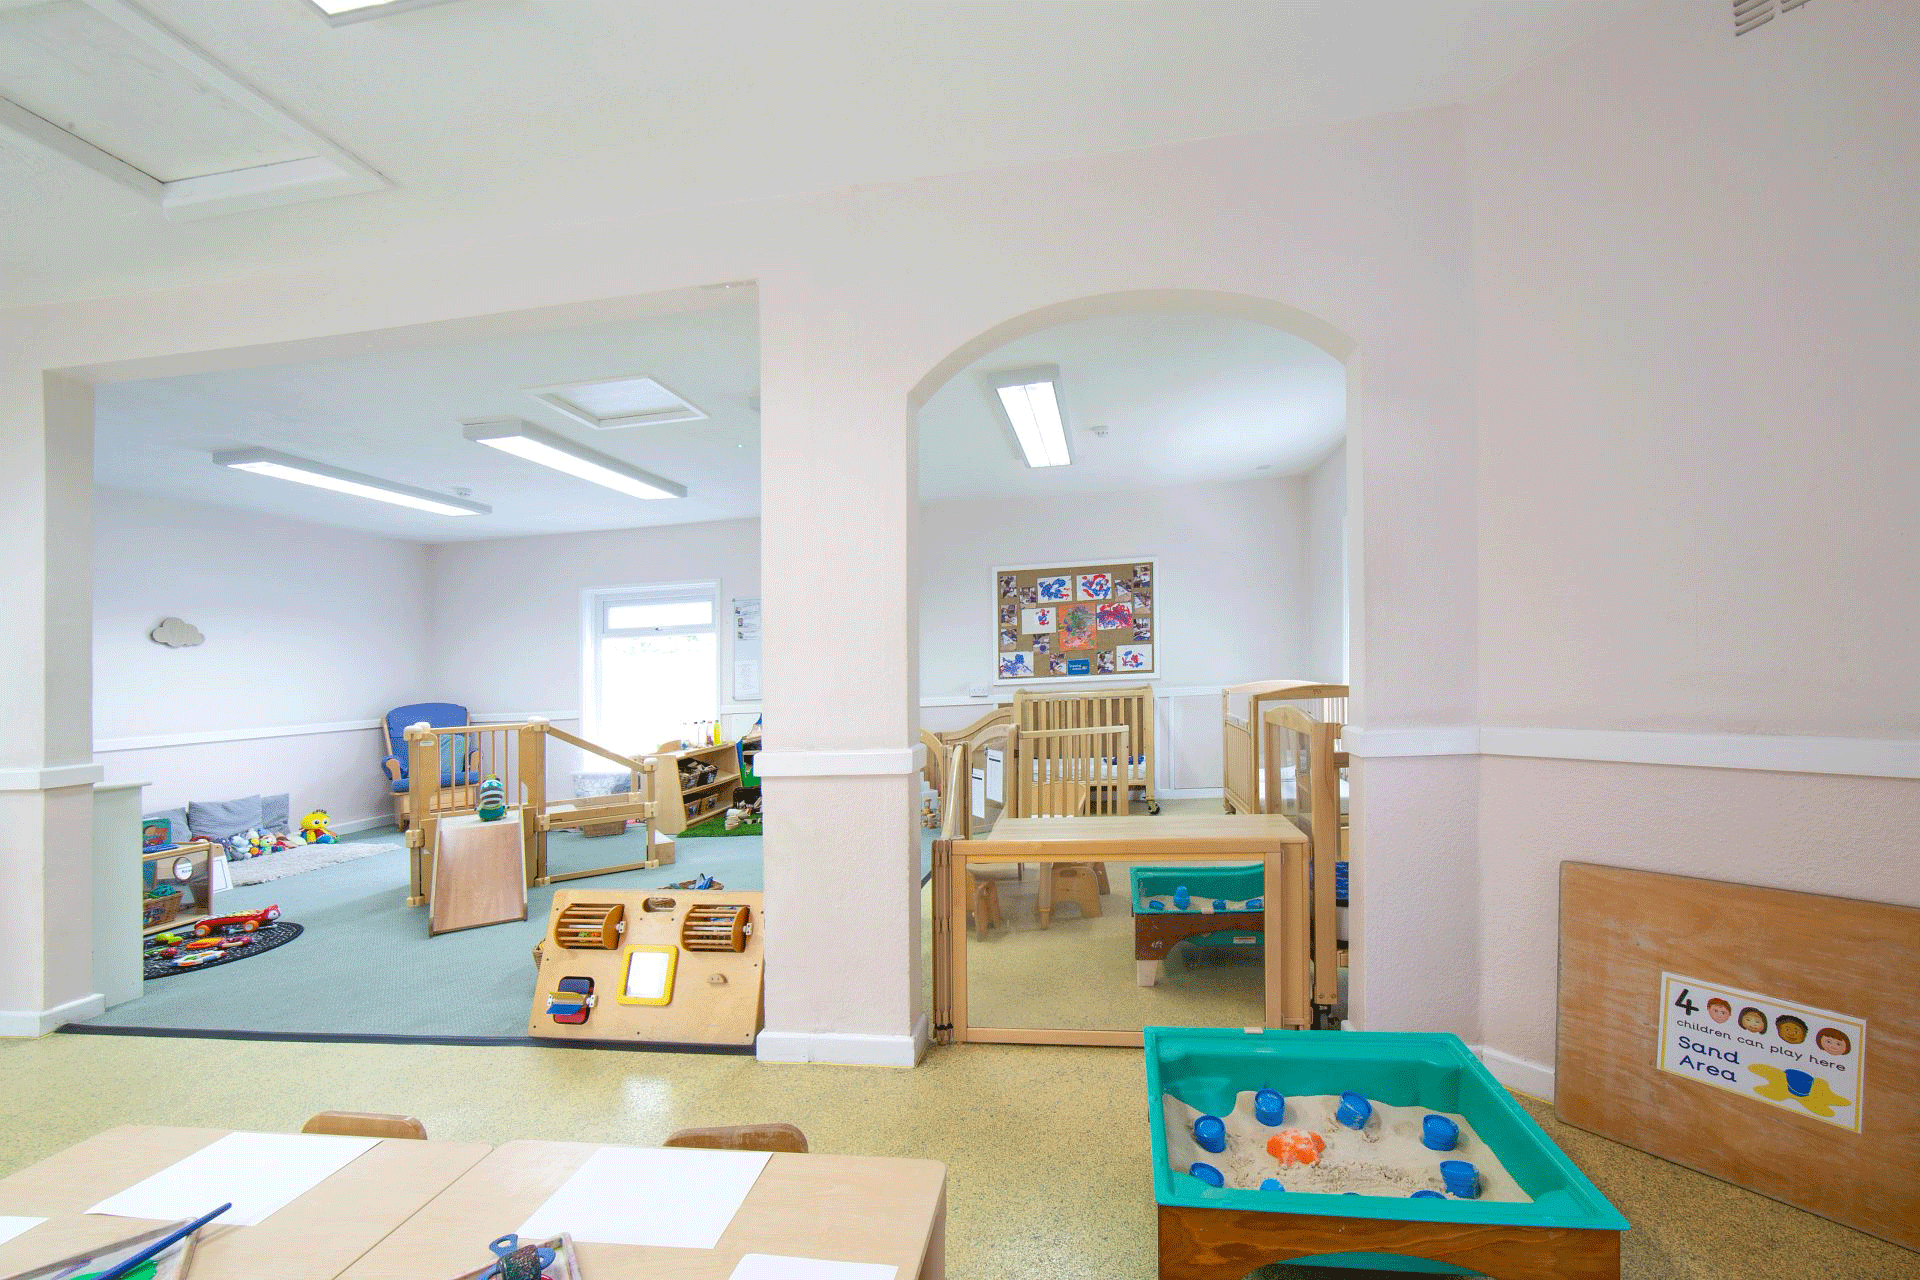 Bright Horizons Portwood Day Nursery and Preschool - Preschool room